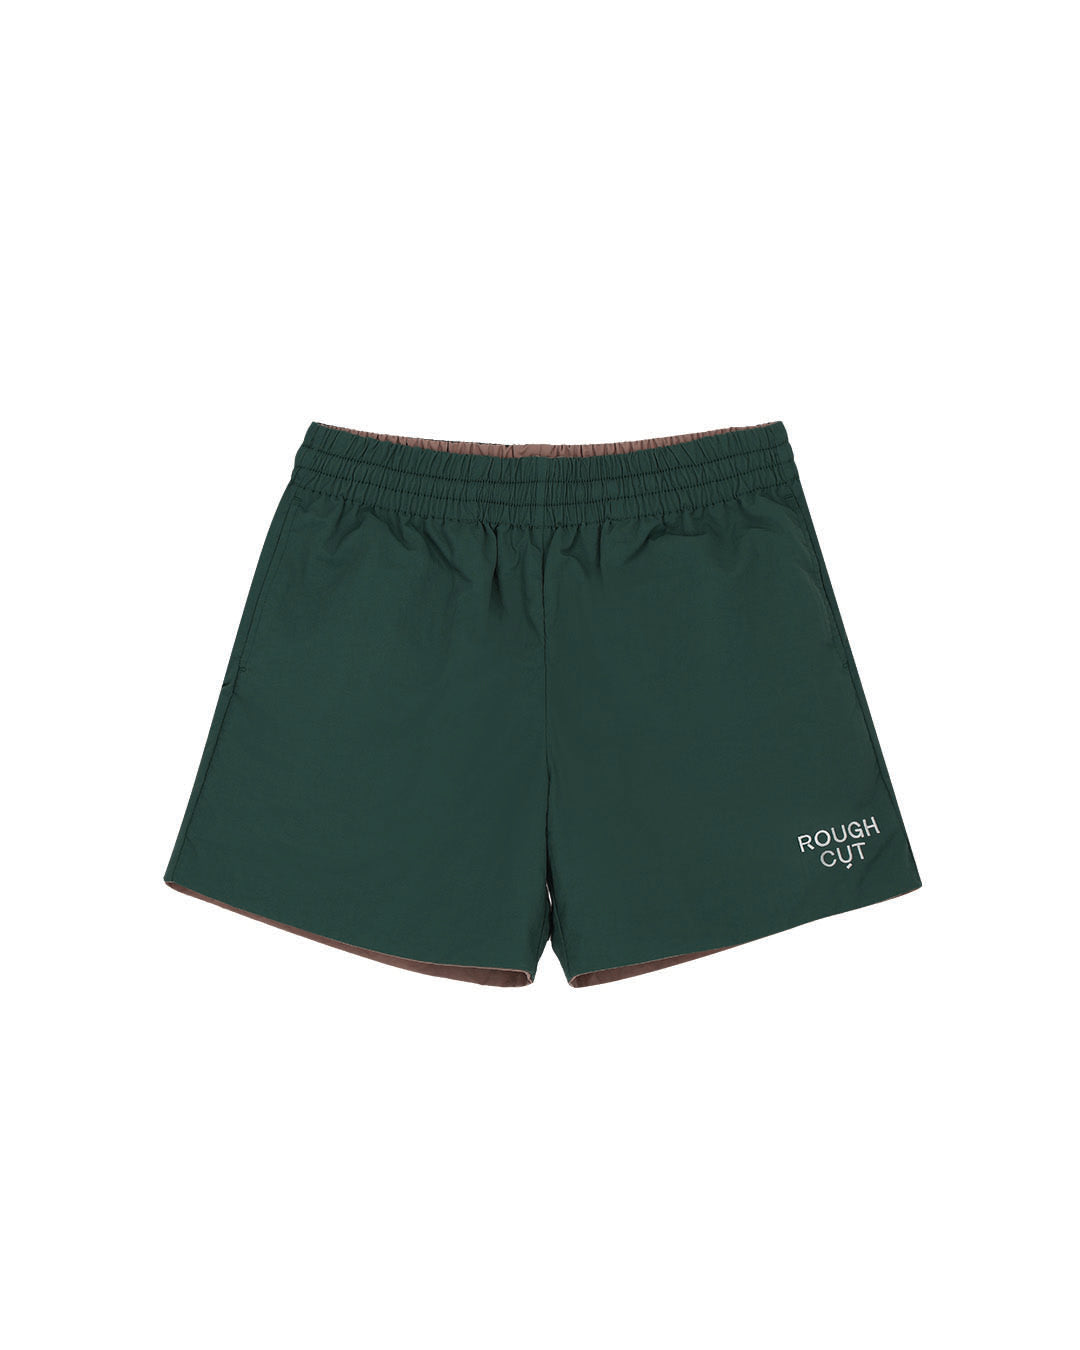 Reversible Shorts®  / Dark Green + Brown